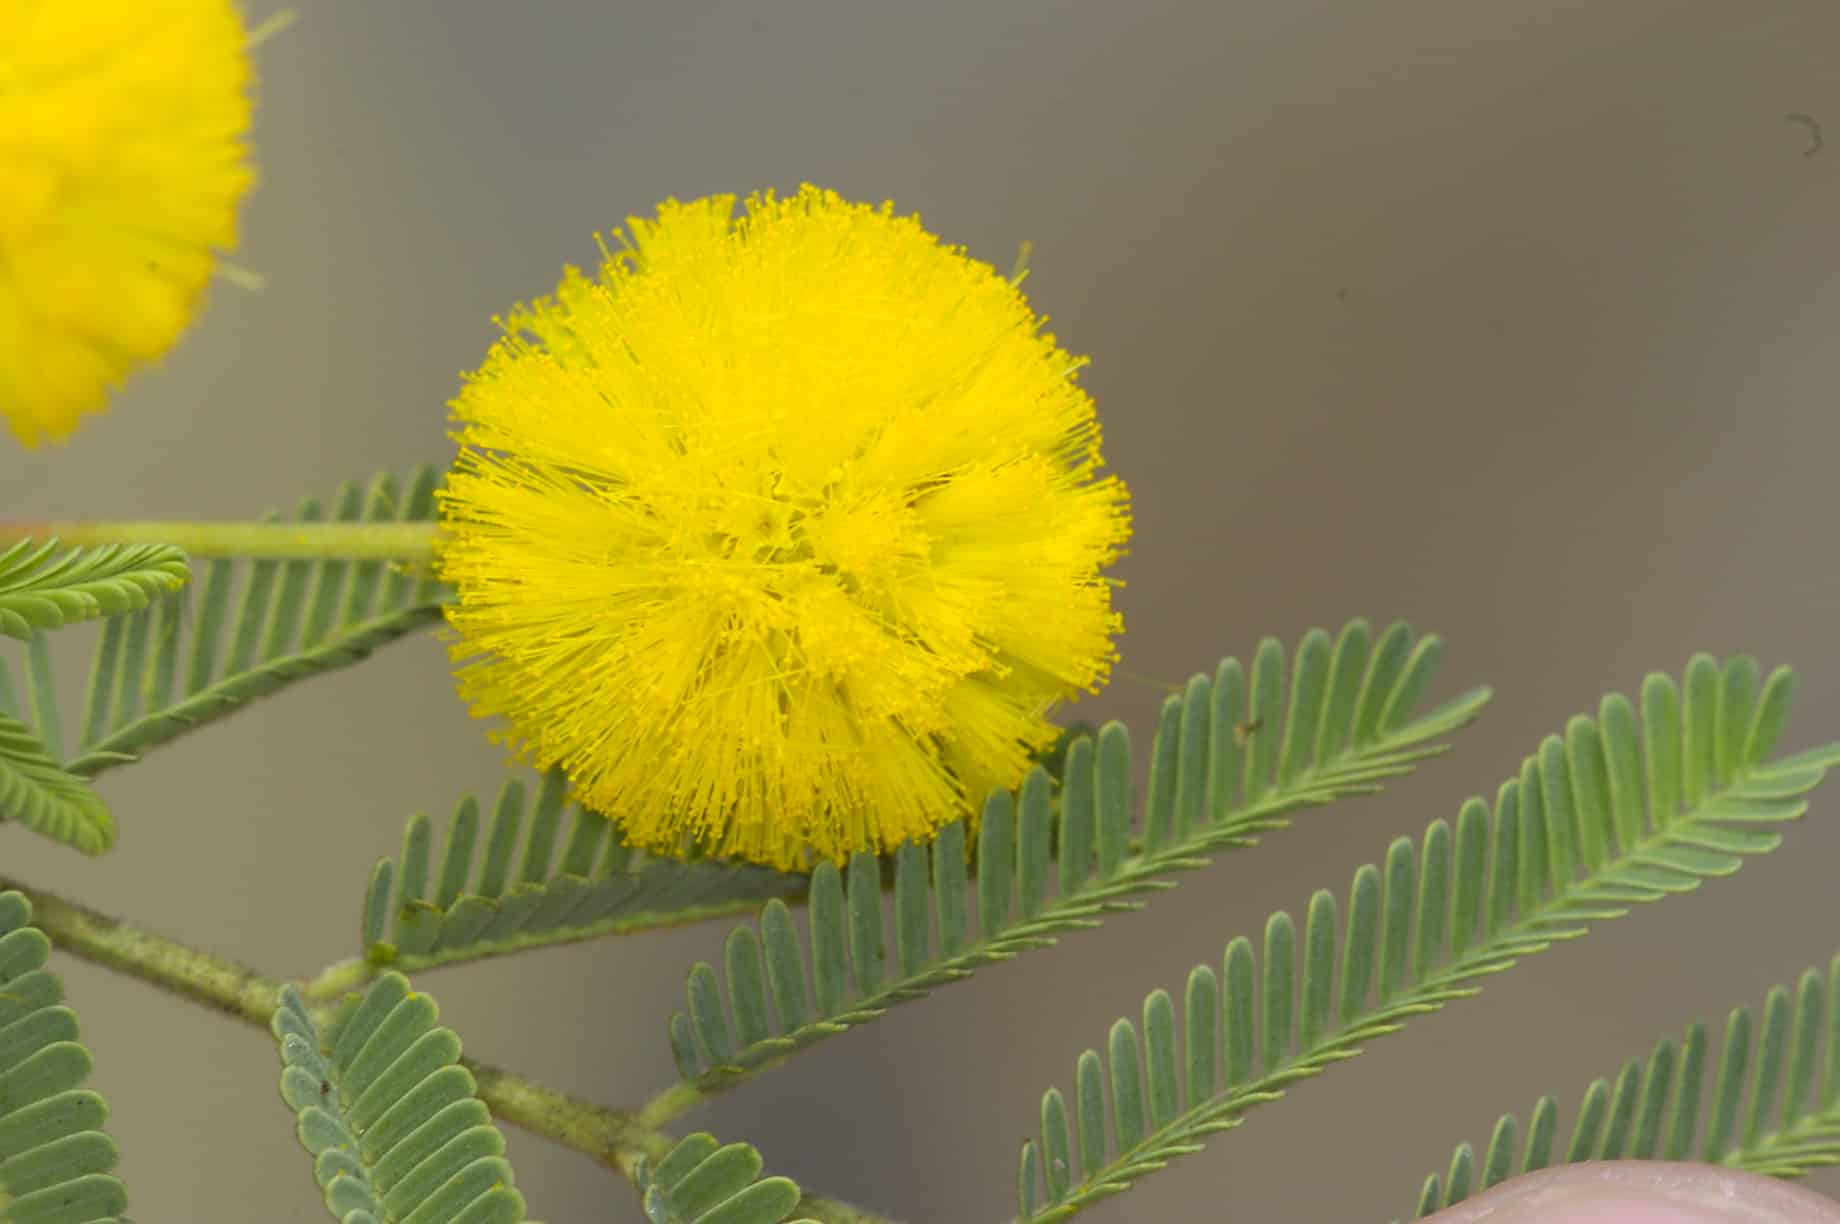 acacia-wattle tree yellow flowers Perth